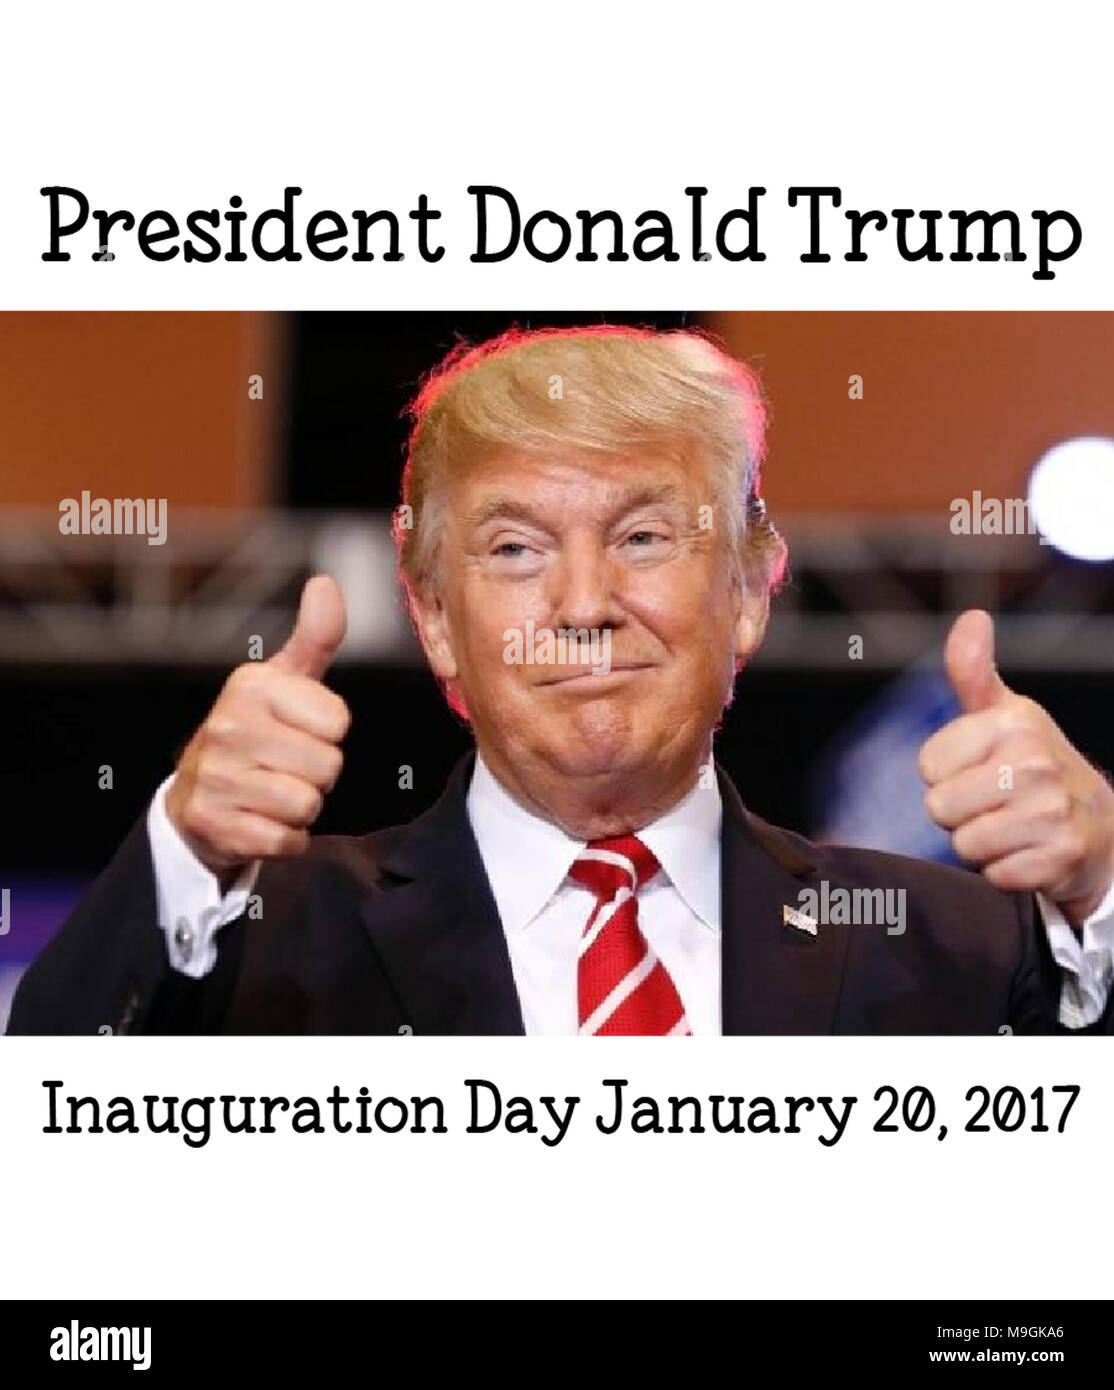 President Donald Trump Inauguration Day January 20, 2017 Stock Photo